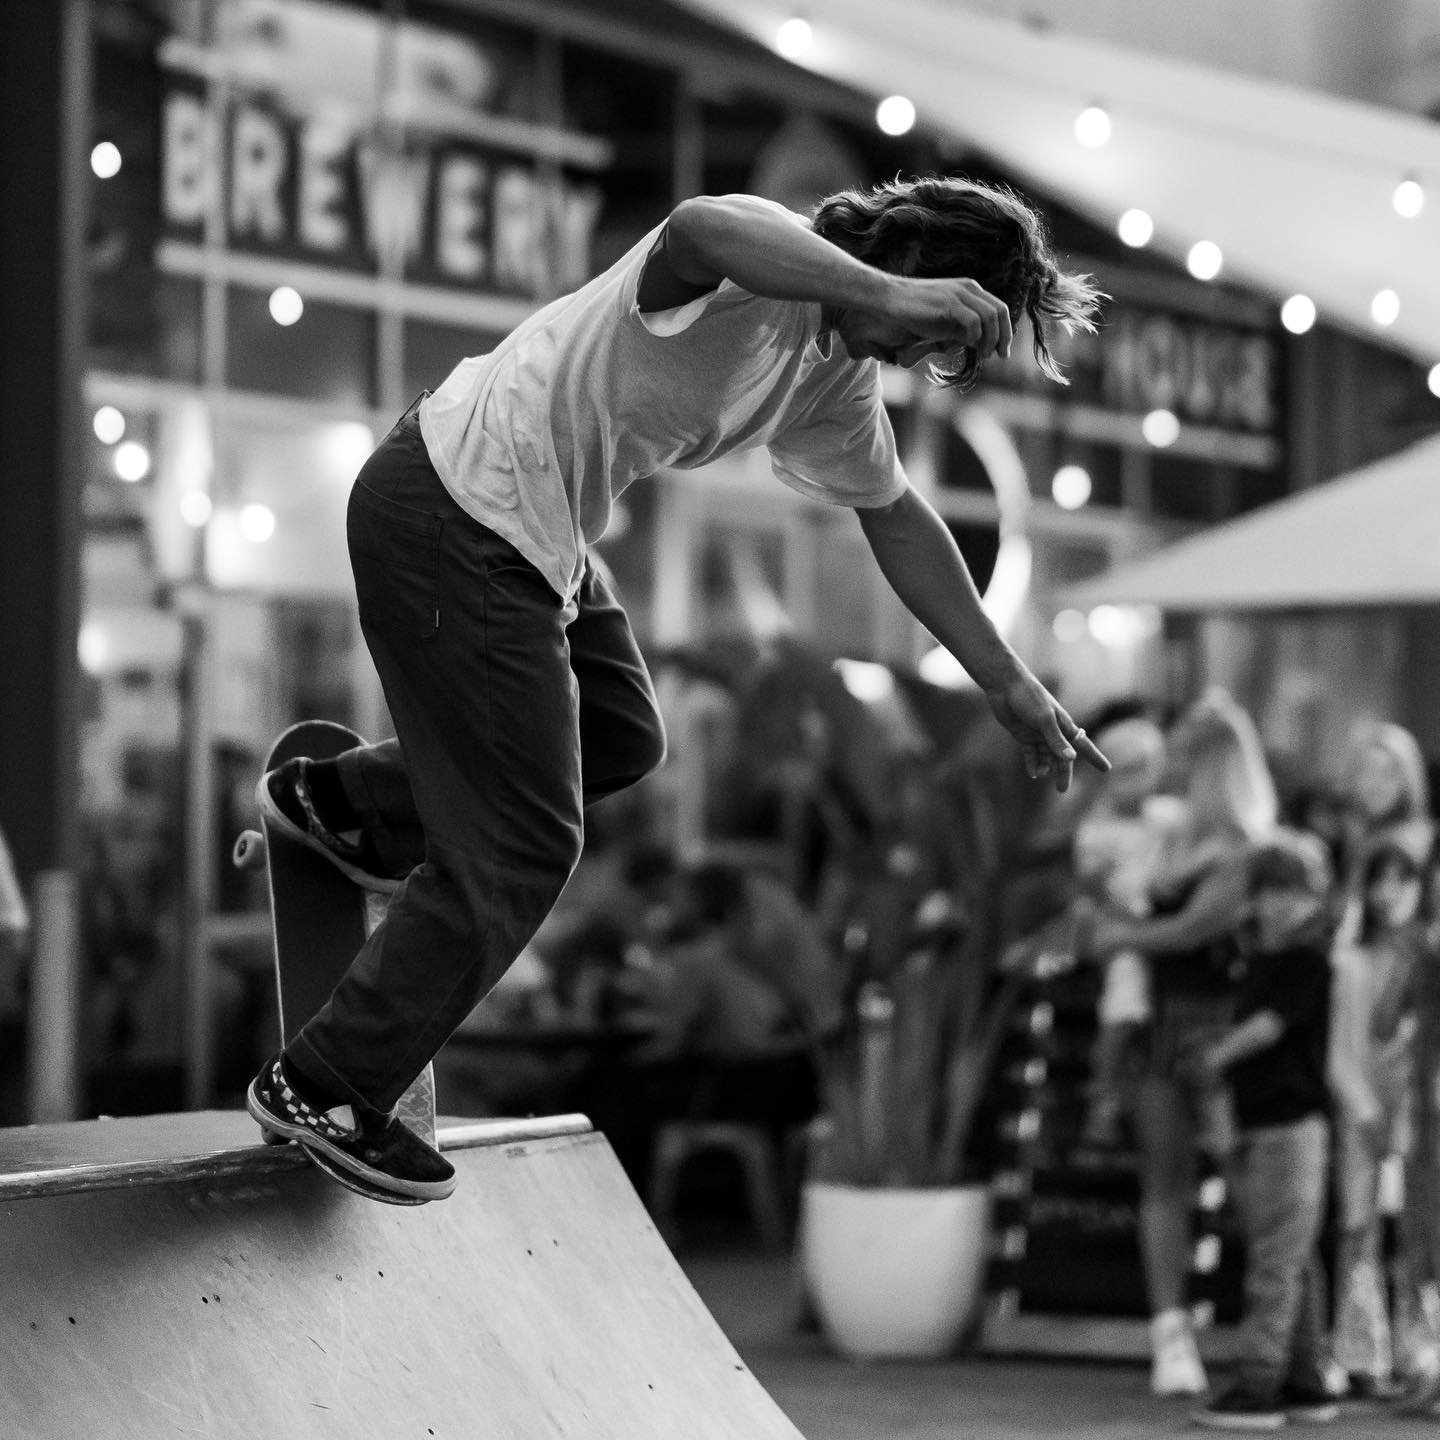 7th Day skate park

Photo @monocaptus 

#skate #park #7thday #brookvaleartsdistrict